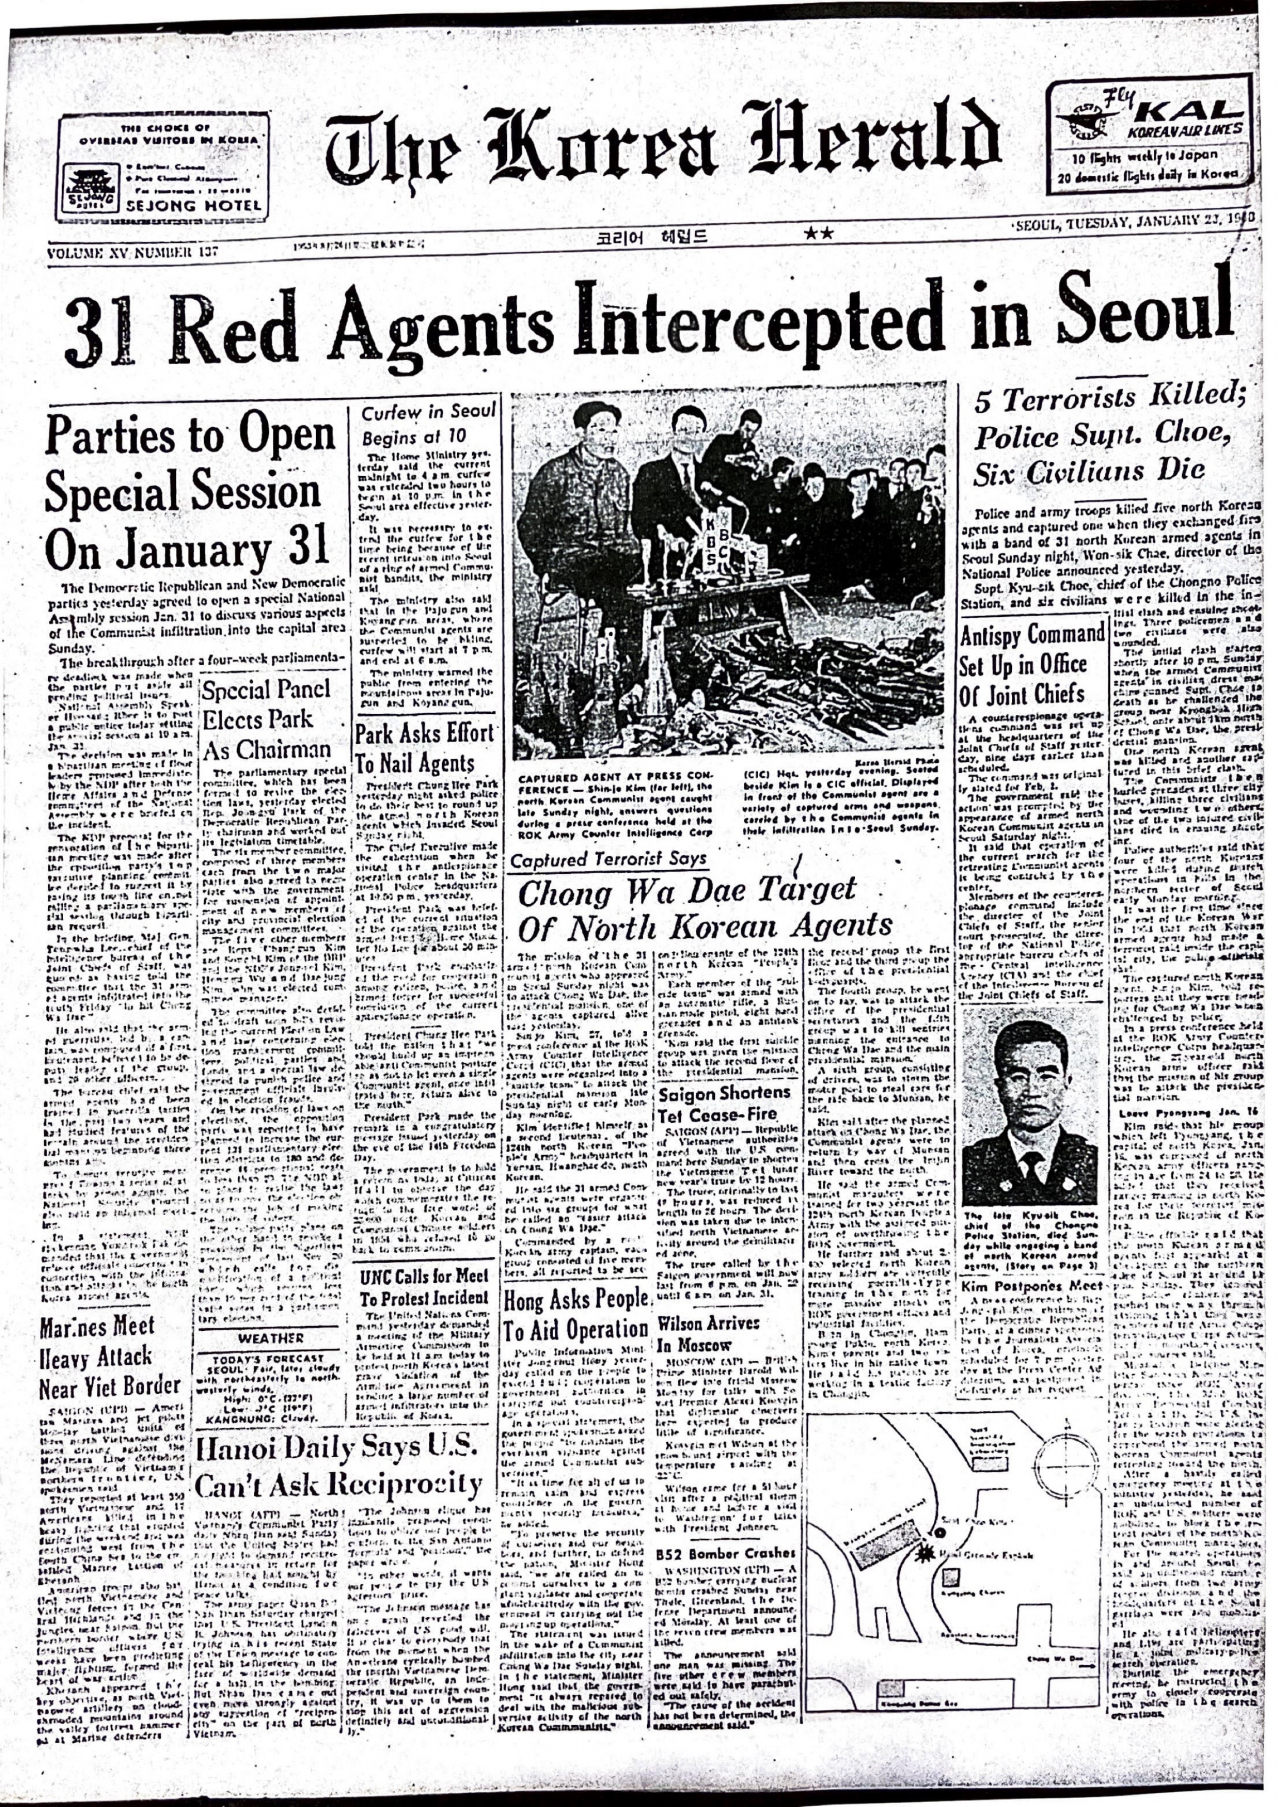 The Jan. 23, 1968 edition of The Korea Herald